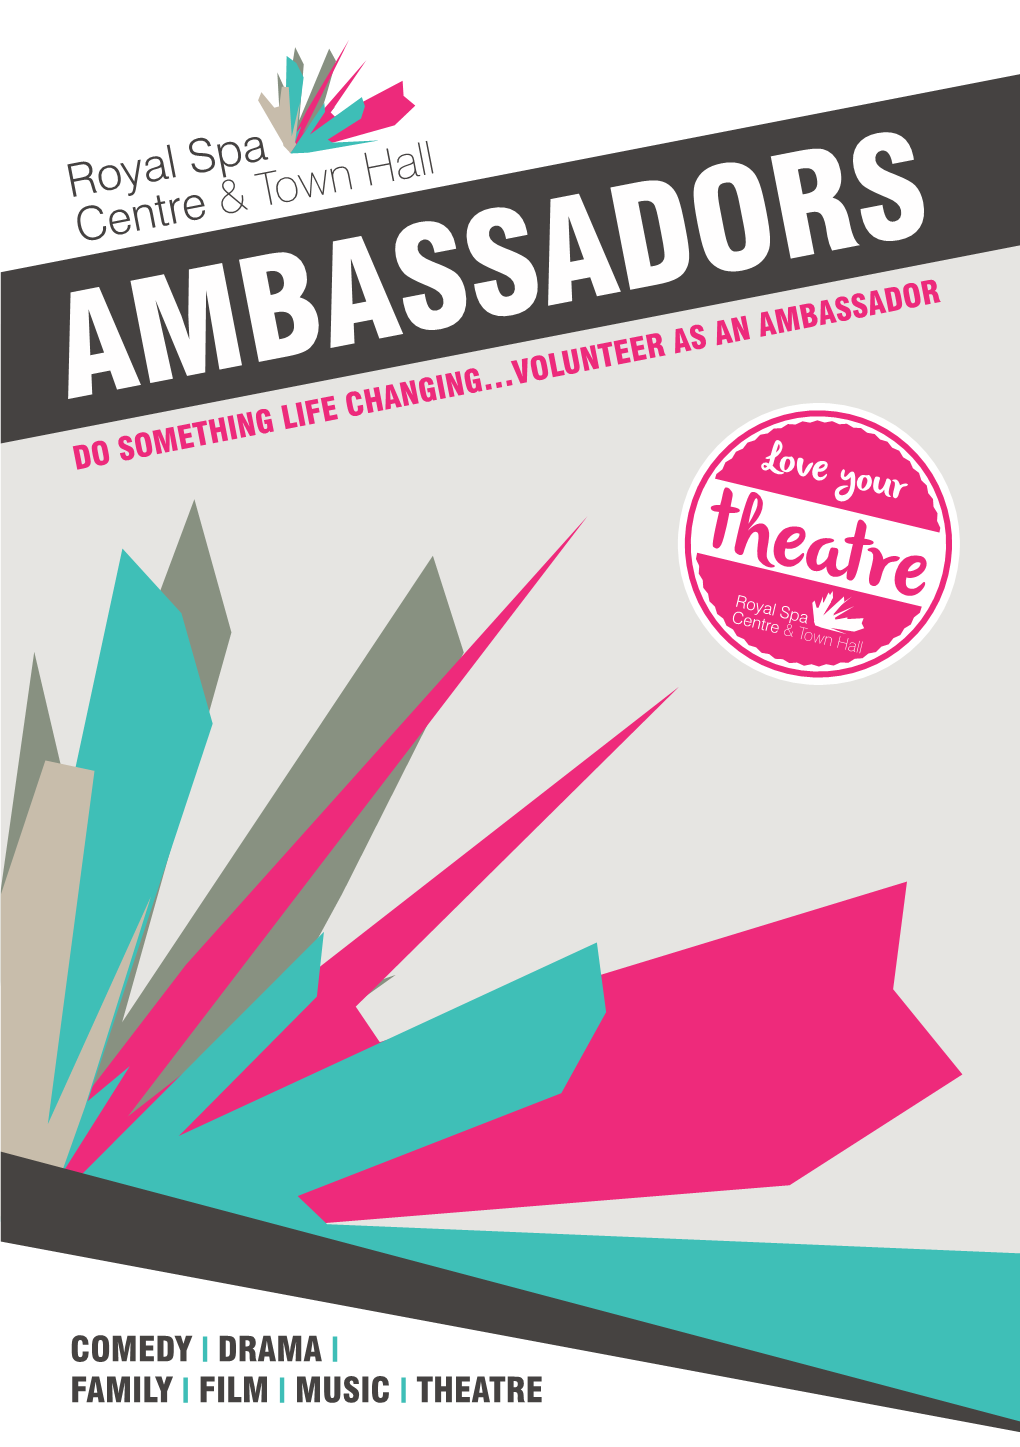 Ambassadors Do Something Life Changing…Volunteer As an Ambassalove Yourdor Theatre